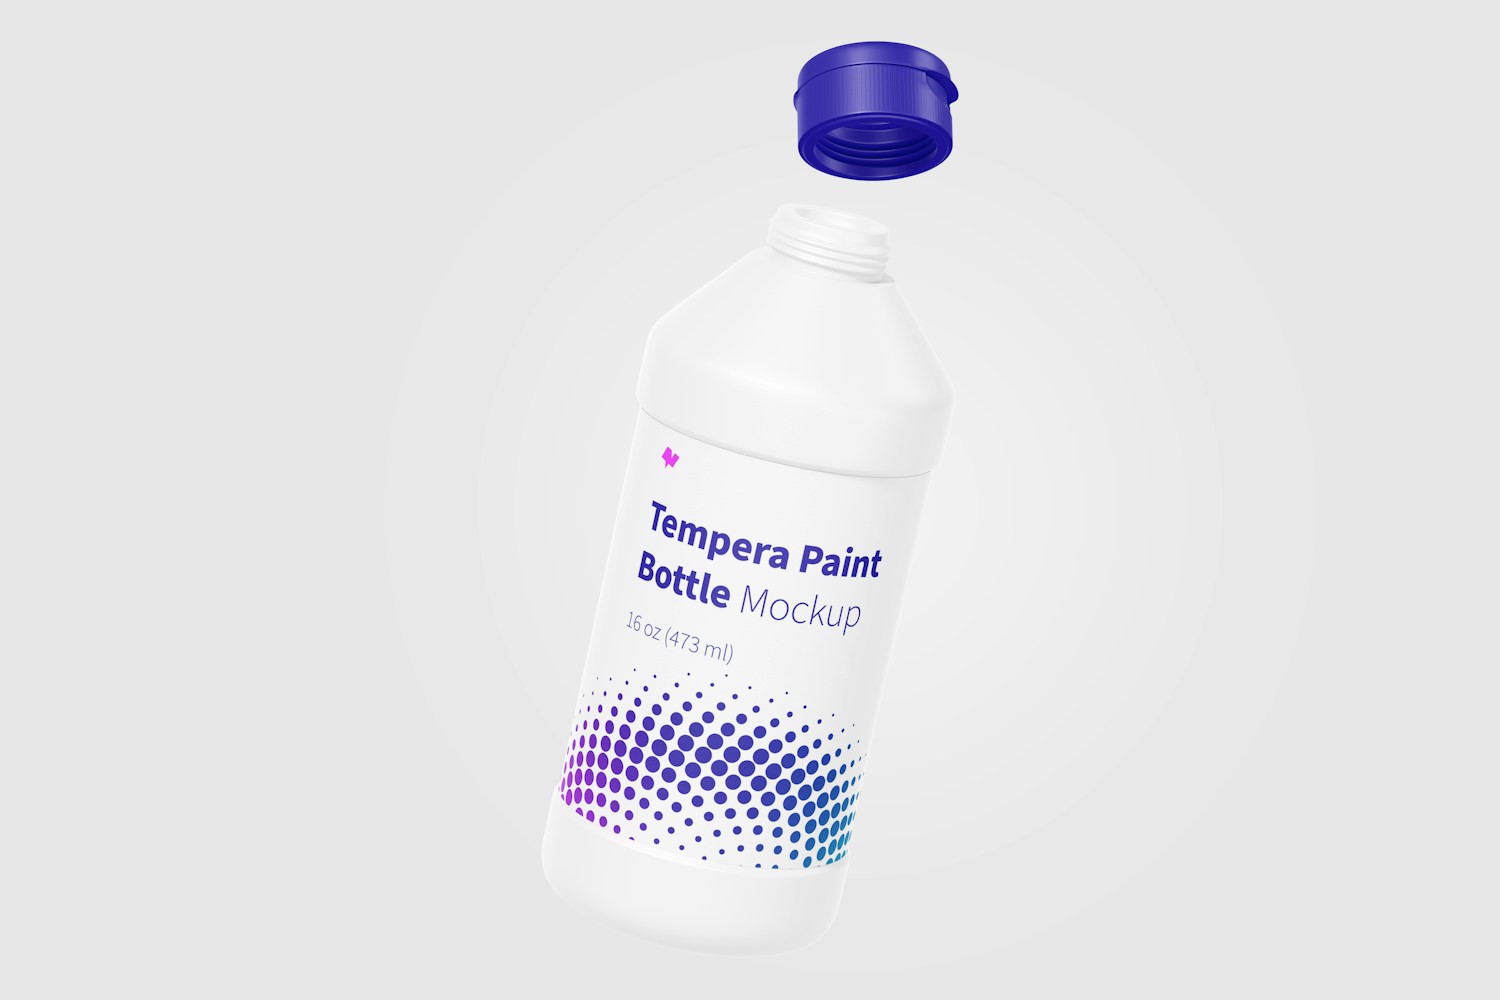 16 oz Tempera Paint Bottle Mockup, Floating